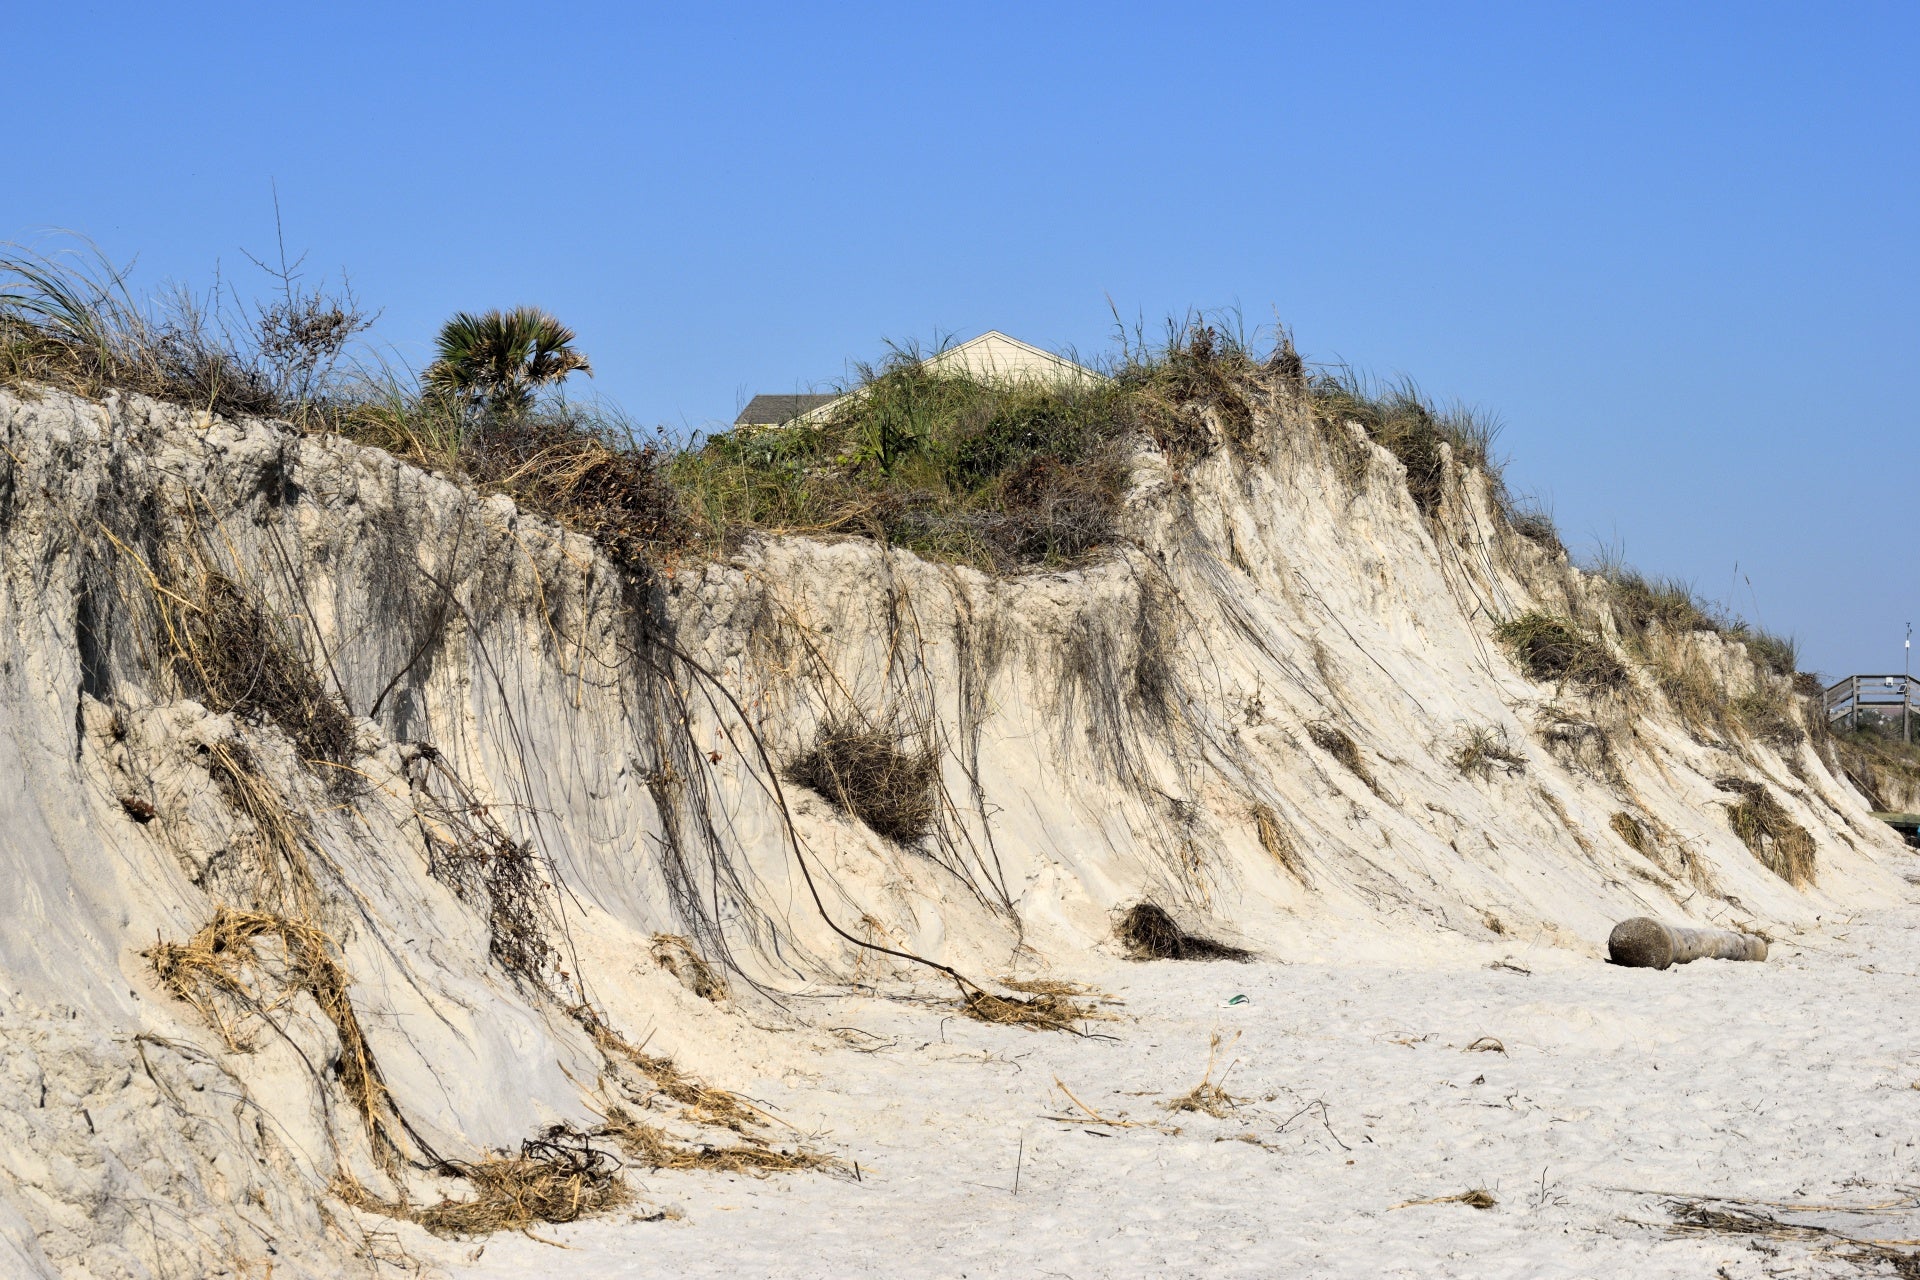  An eroded dune. (Public domain image) 